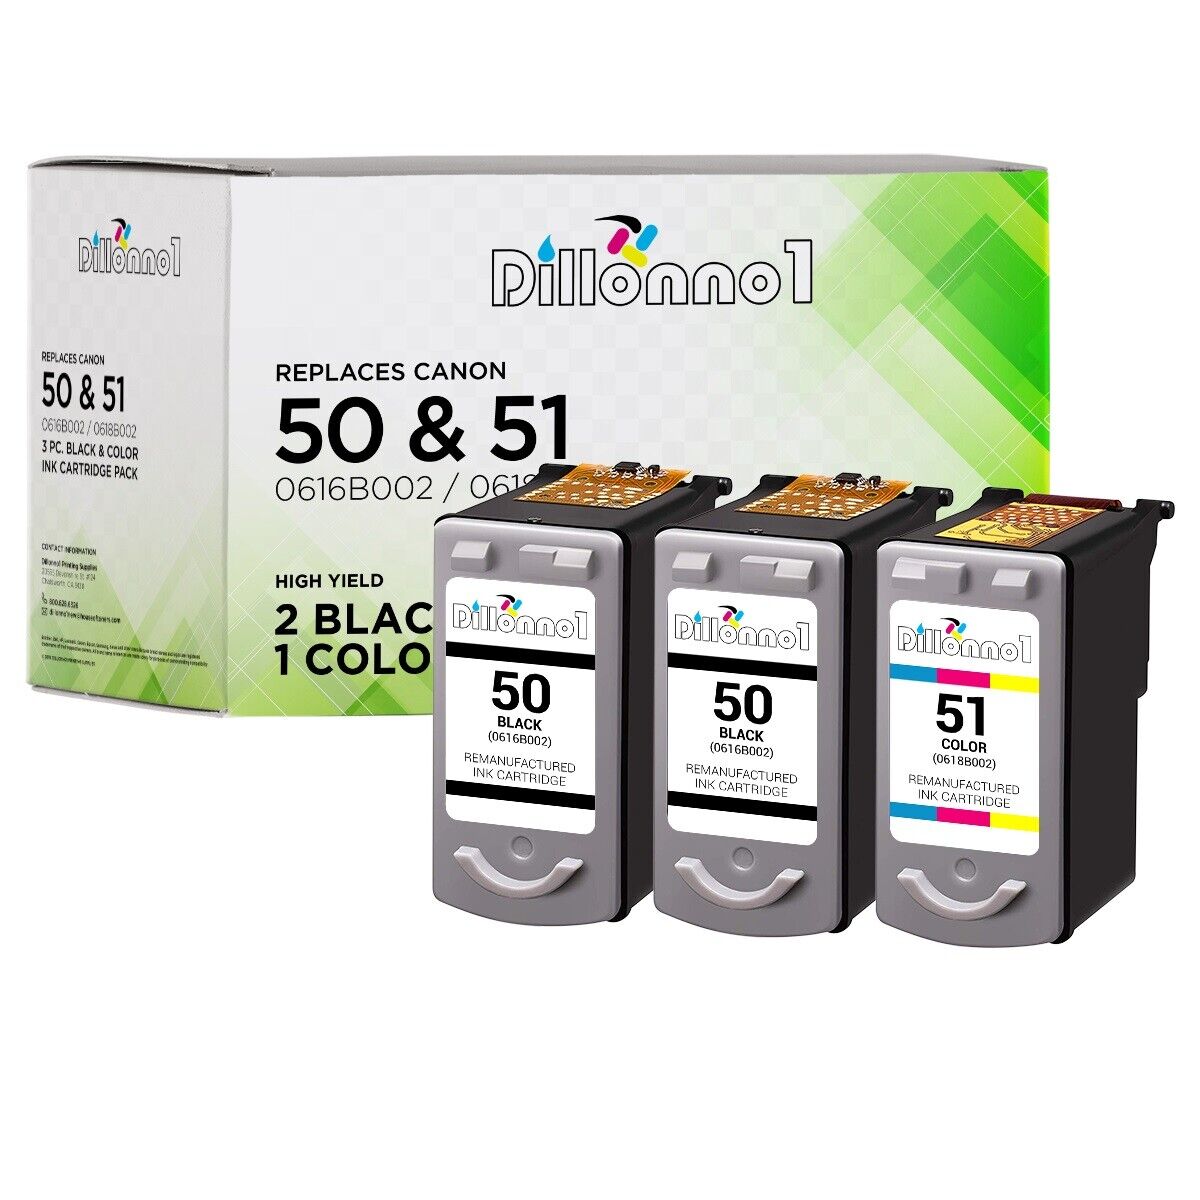 3PK PG 50 Black CL 51 Color fits For Canon PIXMA MP150 MP160 MP170 150 160 170